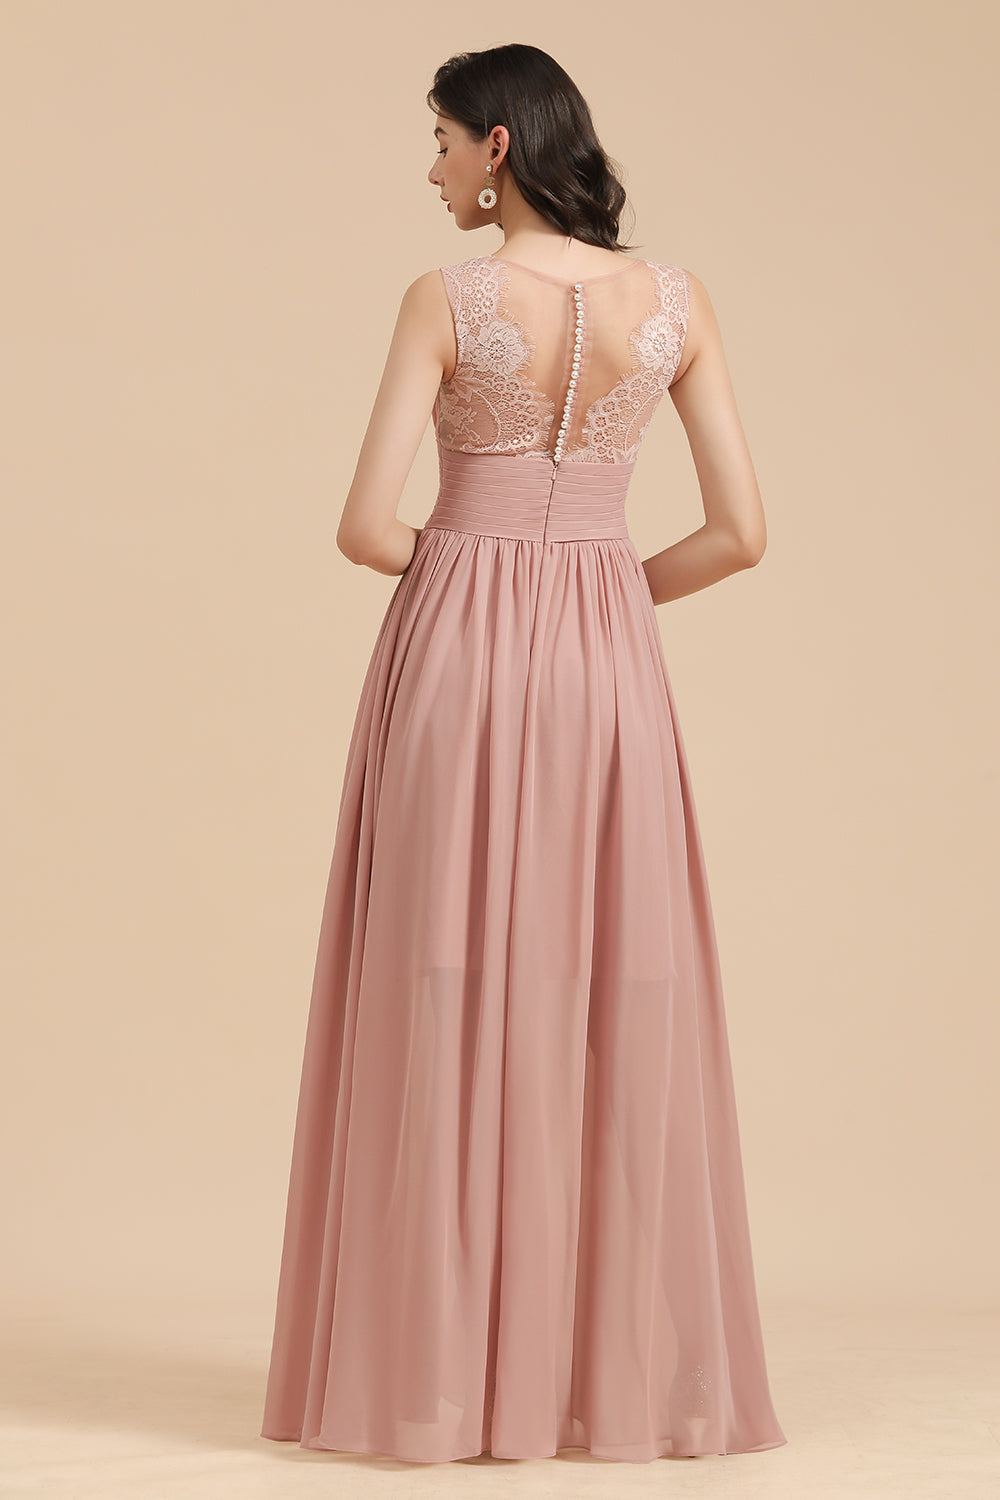 Dusty Rose Chiffon V-Neck Bridesmaid Dress Long-27dress